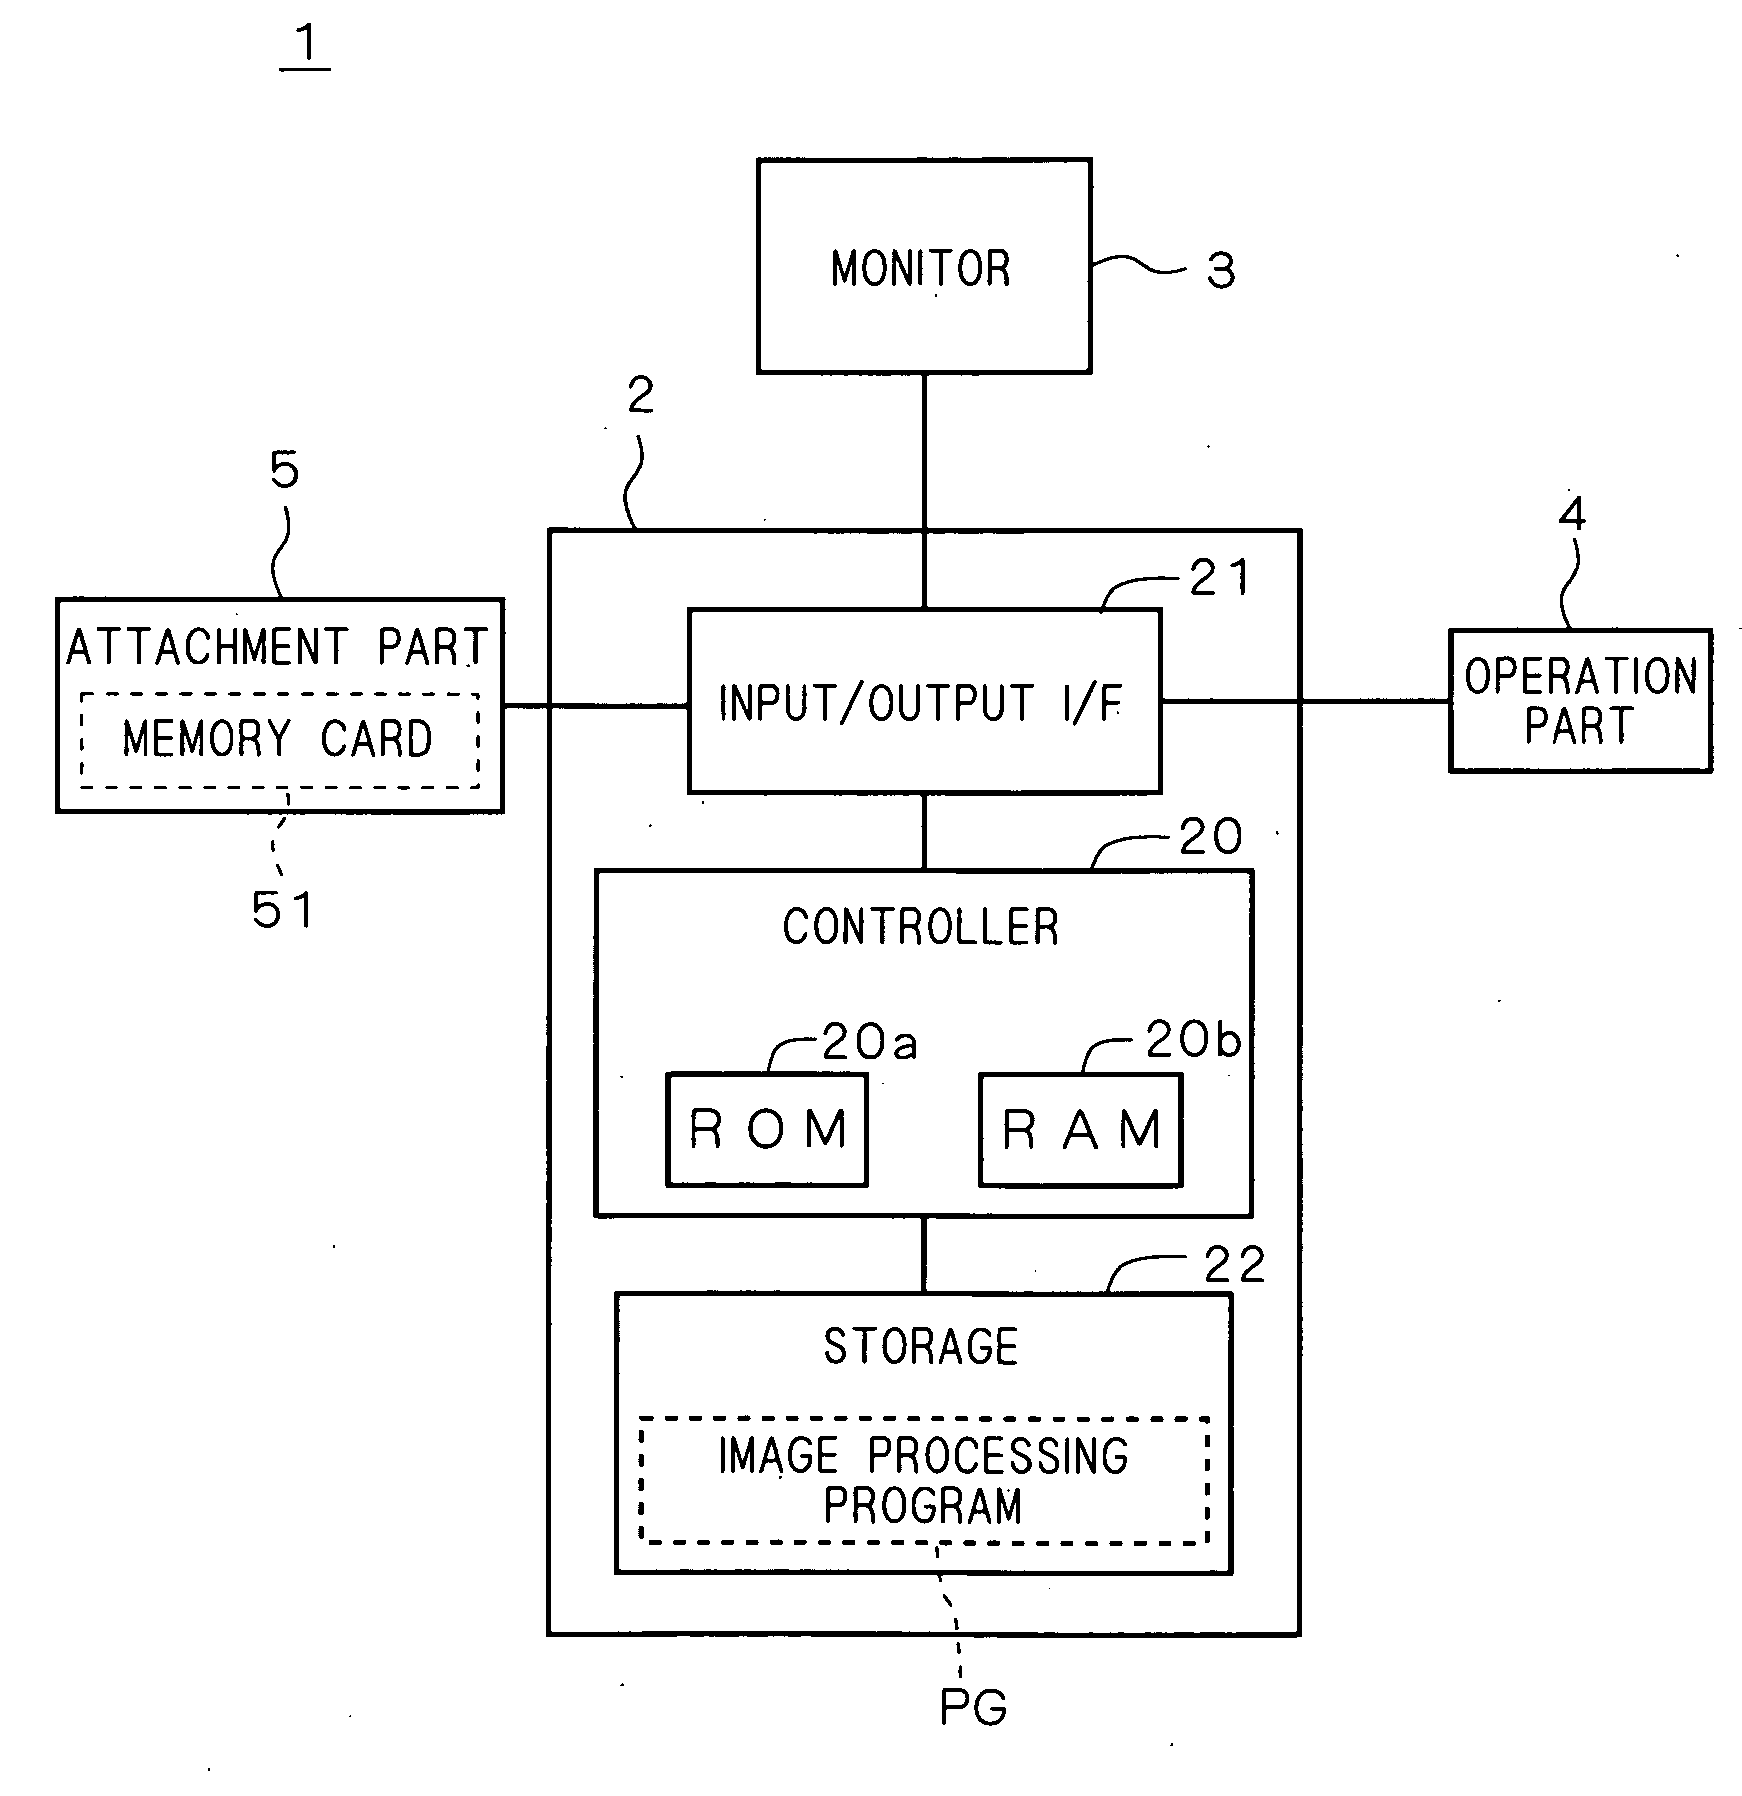 Image processing apparatus, and computer program